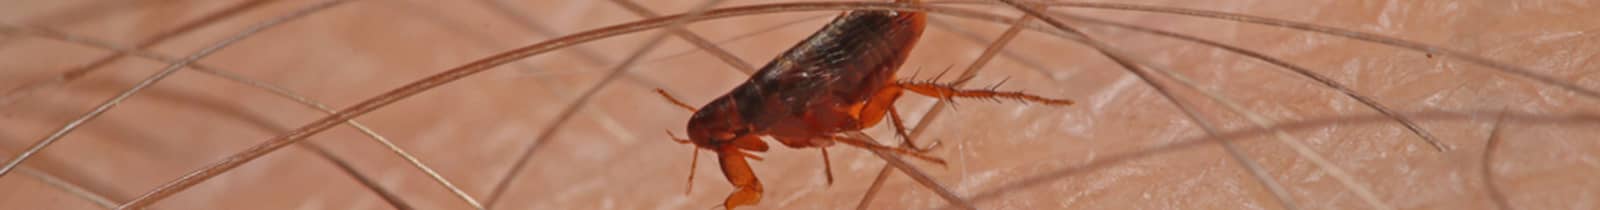 flea-exterminator-treatment